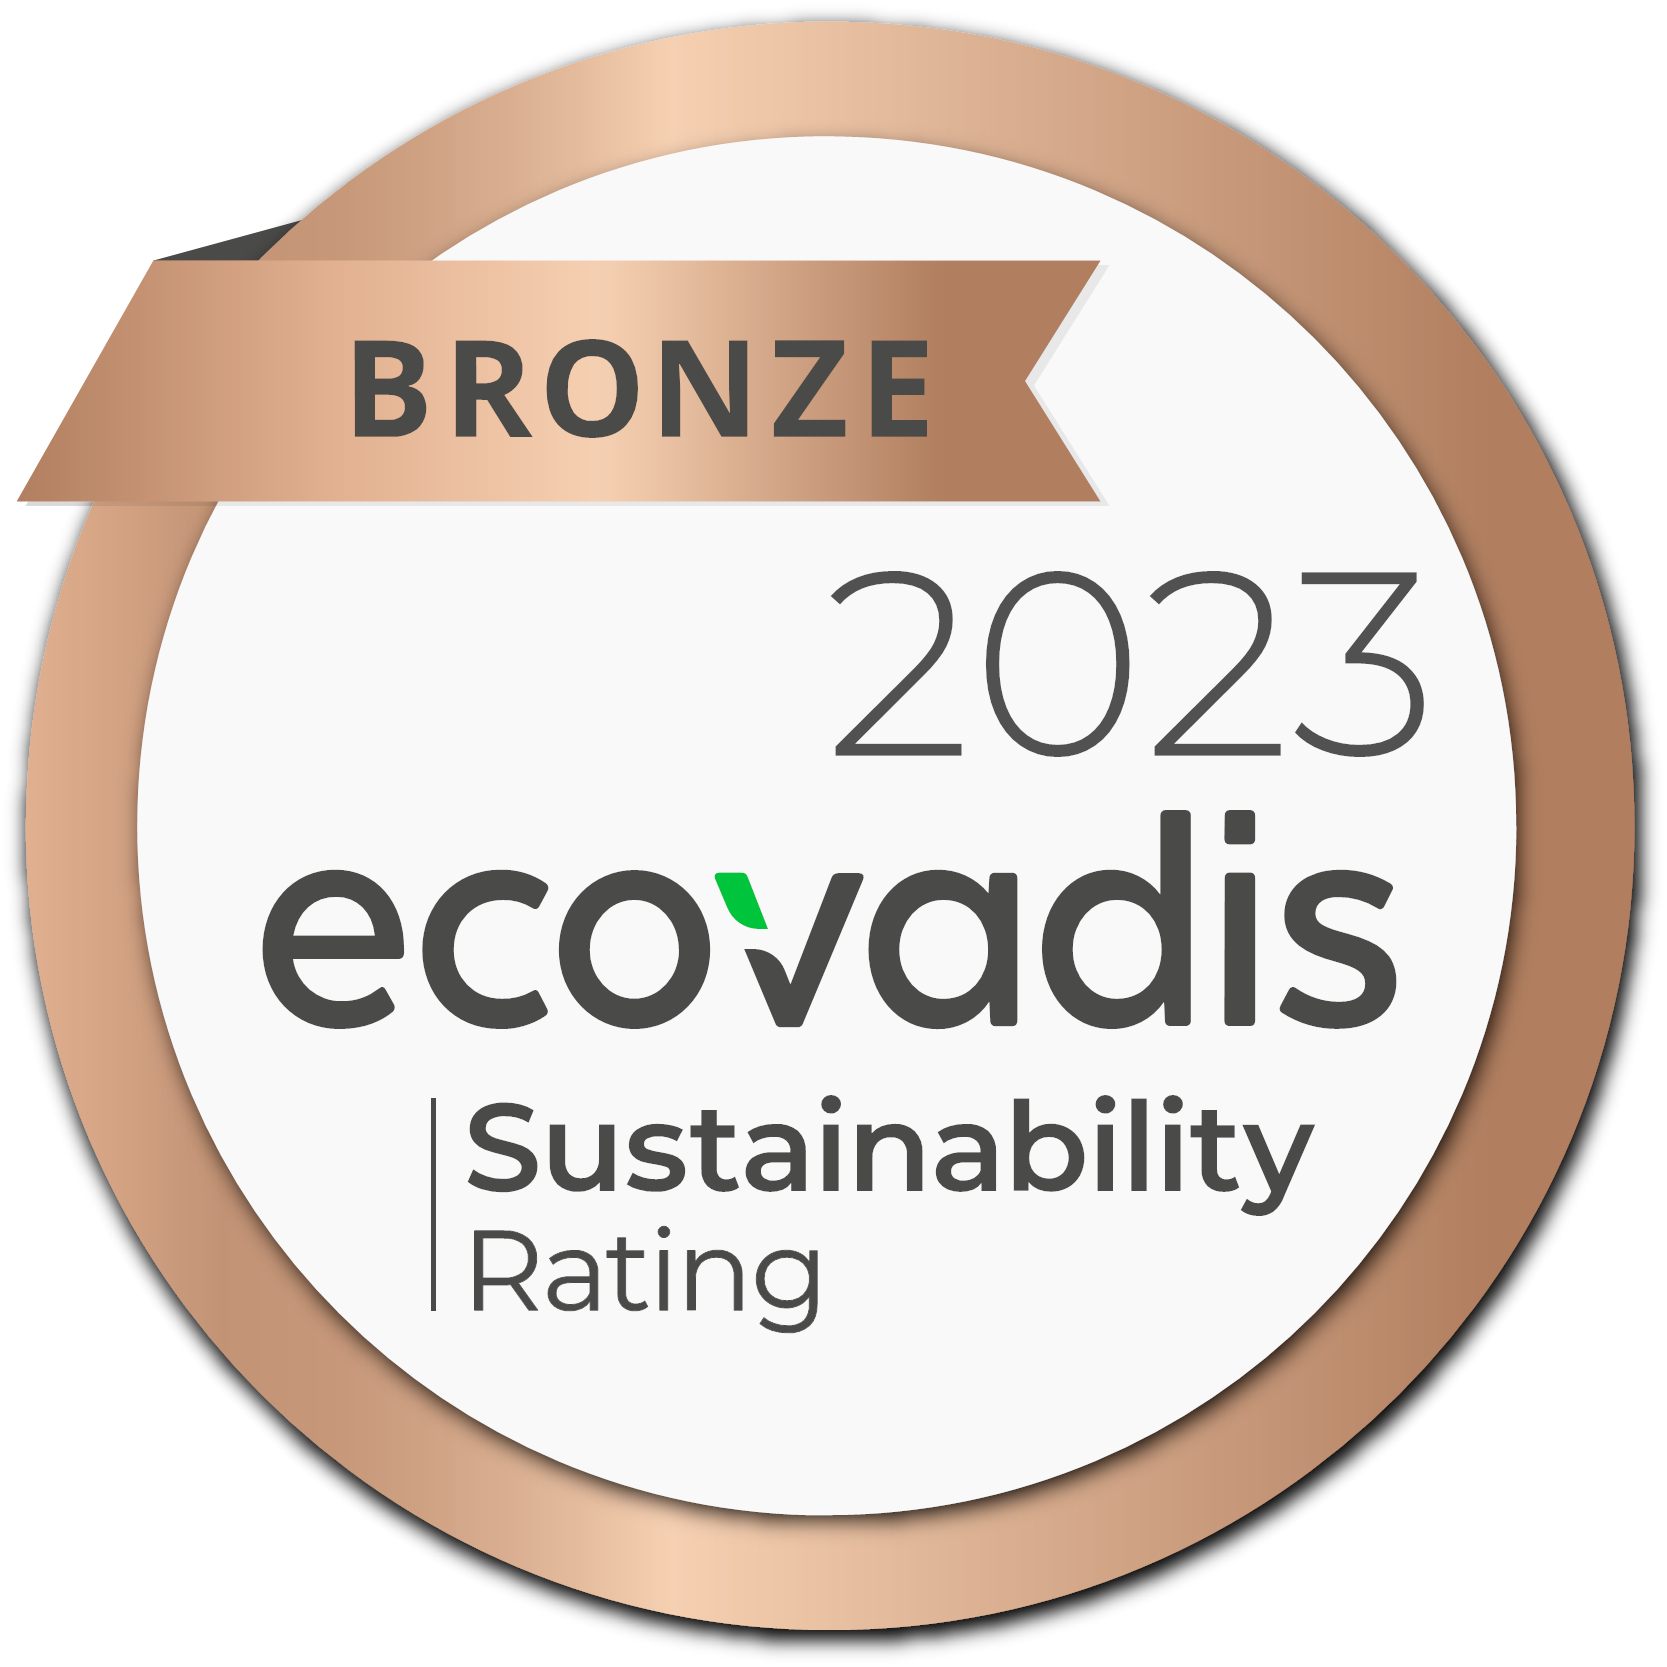 EcoVadis 2023 Bronze Medal